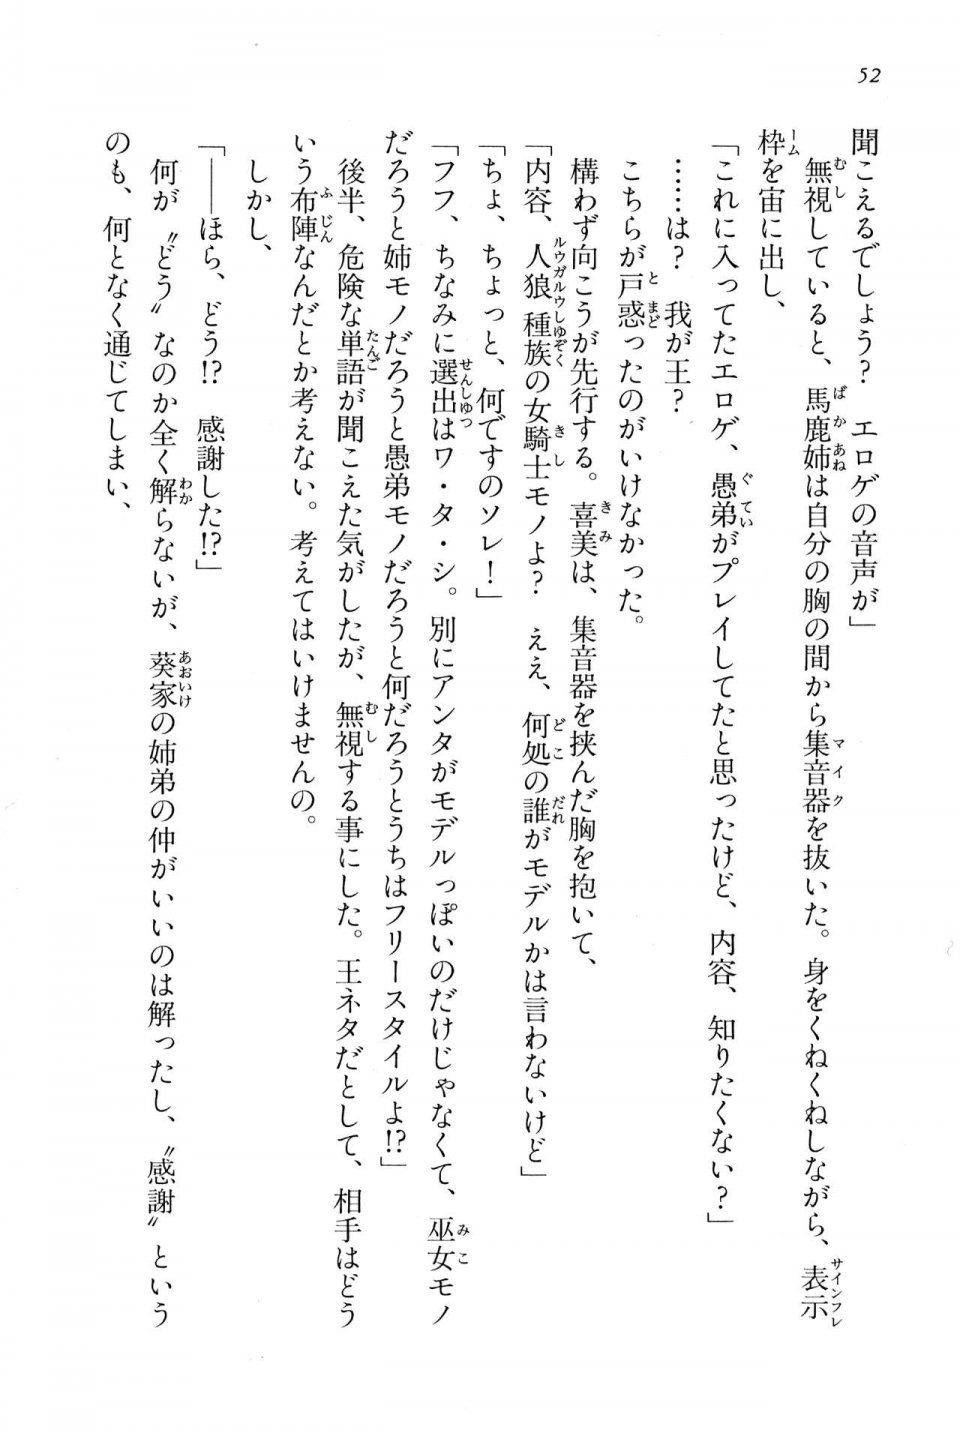 Kyoukai Senjou no Horizon BD Special Mininovel Vol 6(3B) - Photo #56